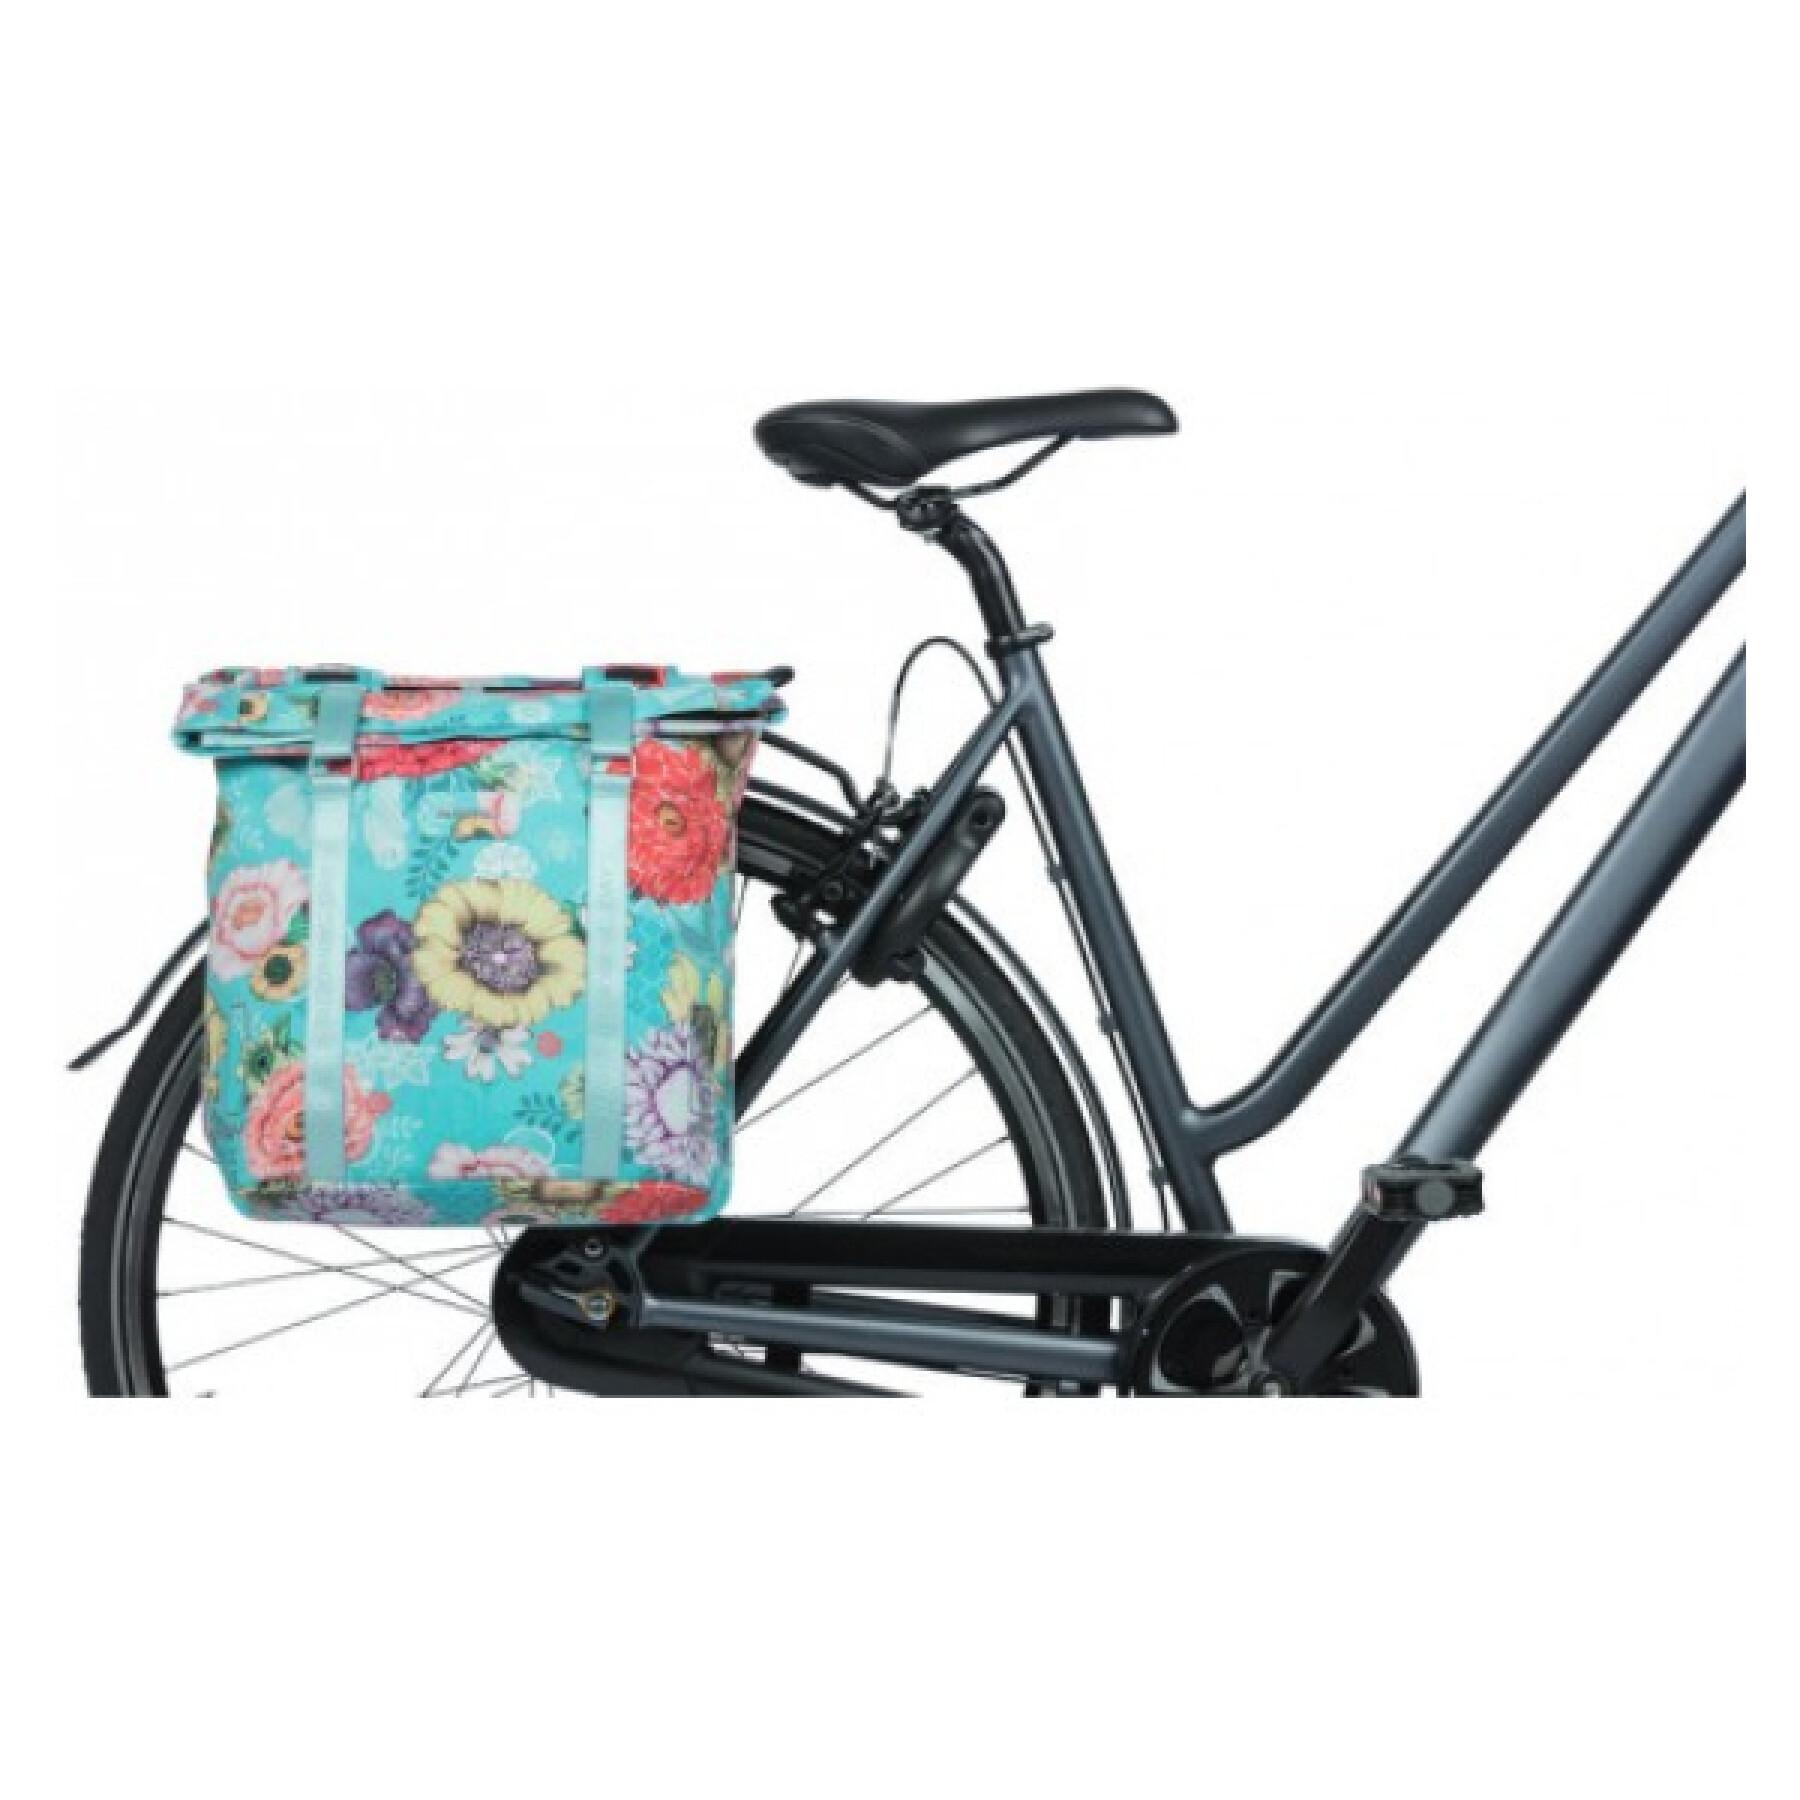 Bolsa de poliéster impermeable para bicicletas con material reflectante Basil bloom field